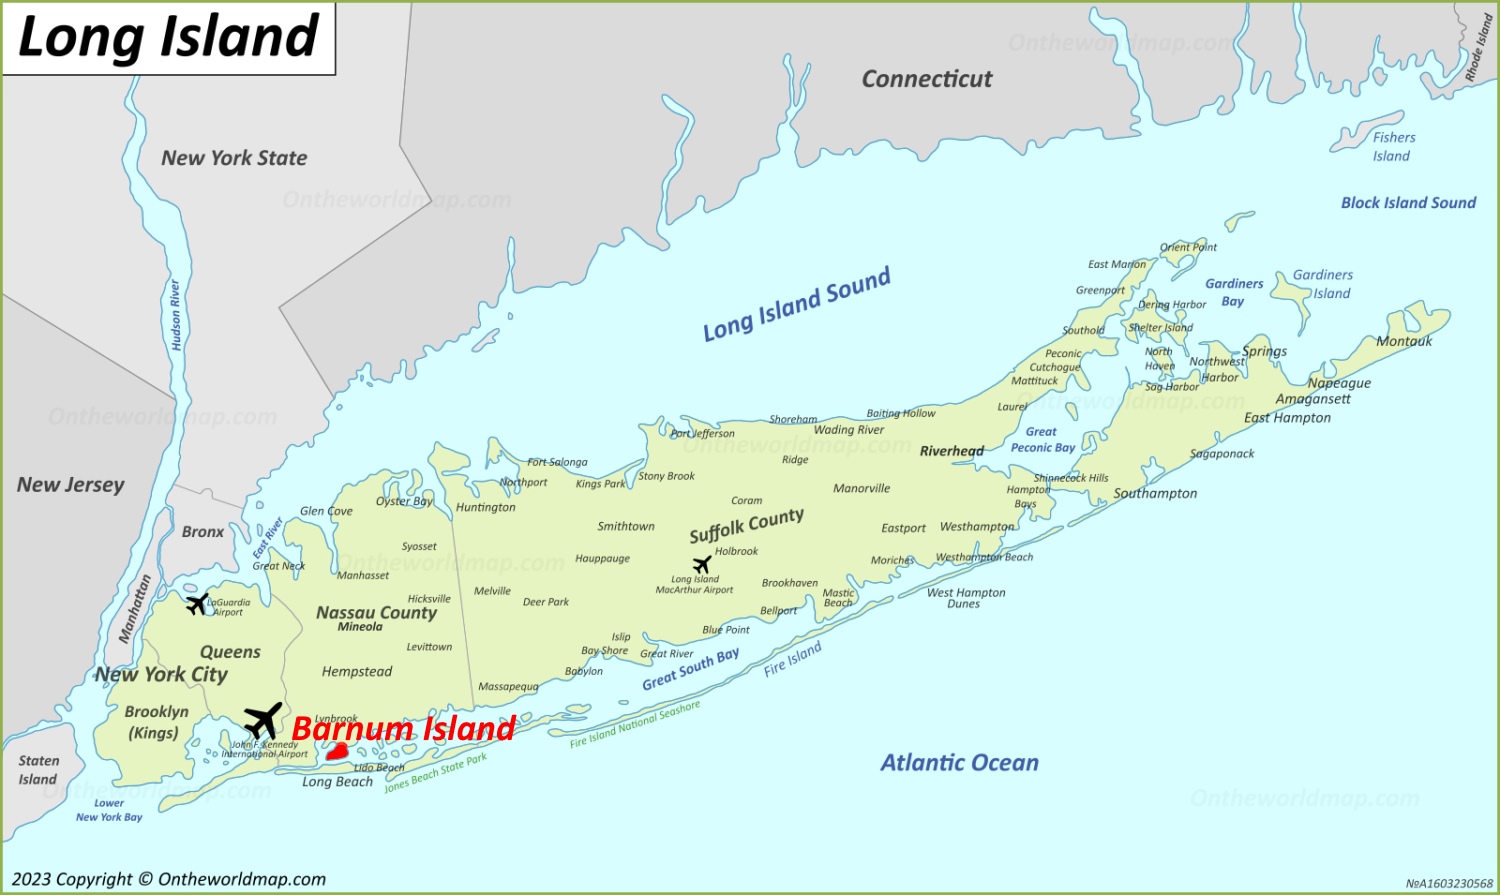 Barnum Island Location On The Long Island Map